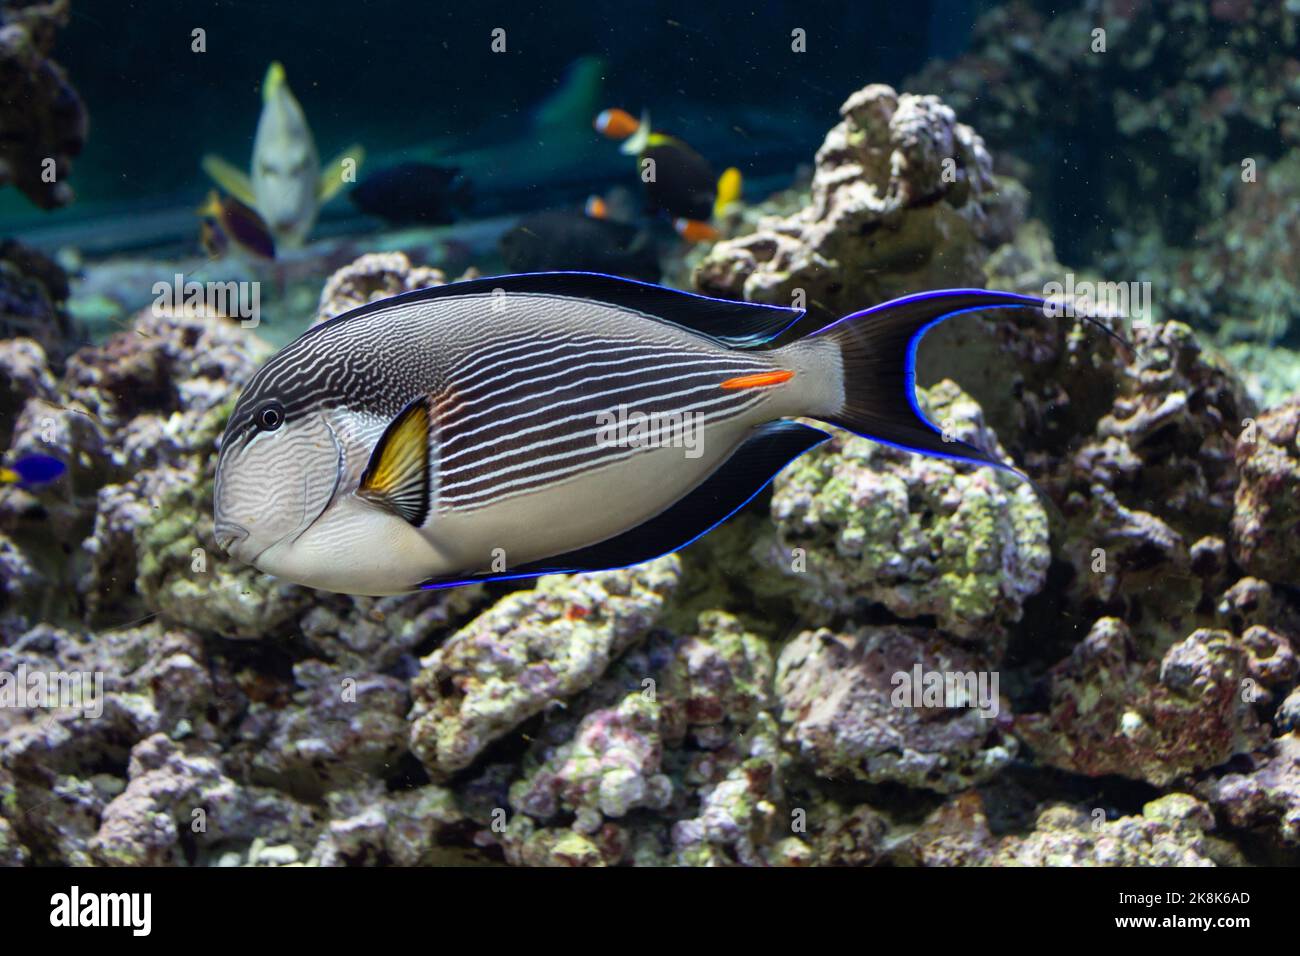 A close-up shot of Blue Parrot Fish in an aquarium Stock Photo